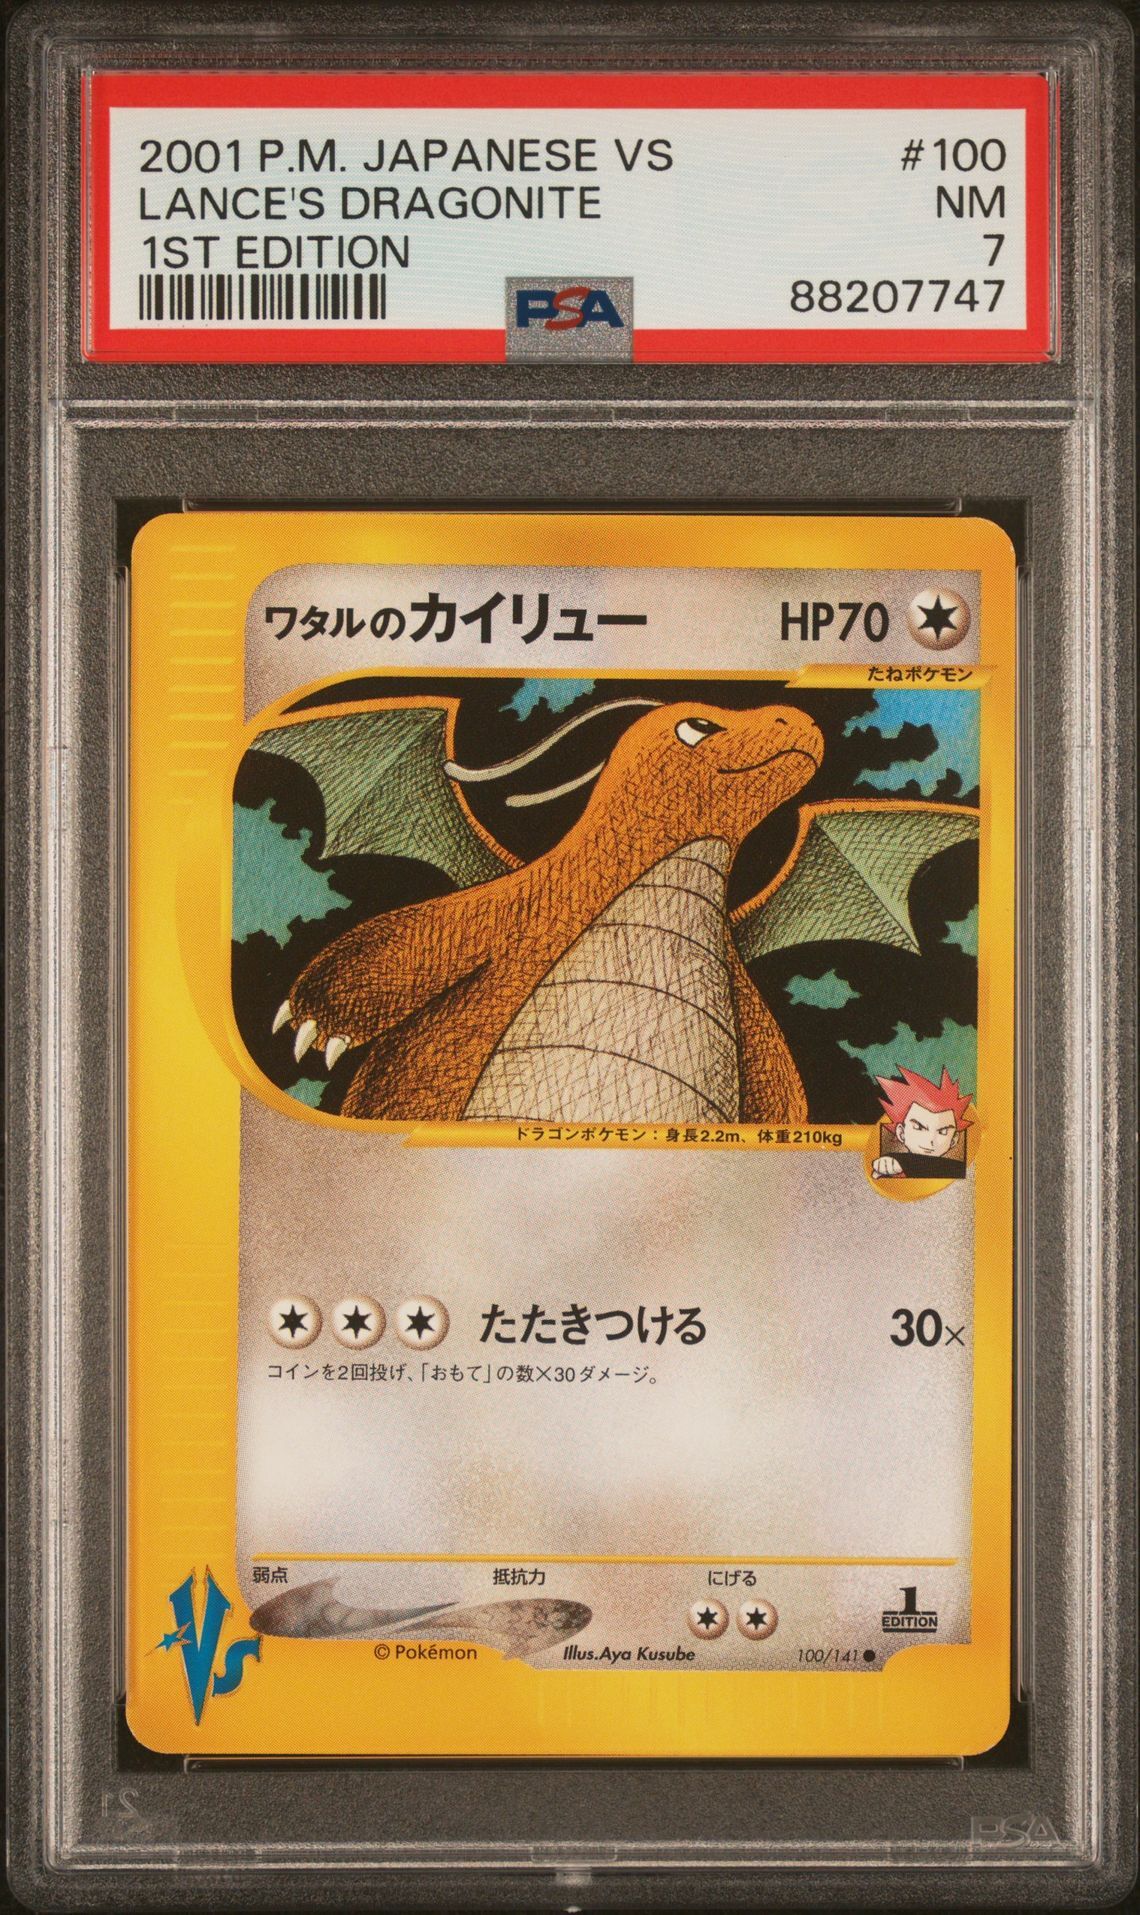 2001 POKEMON JAPANESE VS 100 LANCE'S DRAGONITE 1ST EDITION - PSA 7 NM - Pokémon